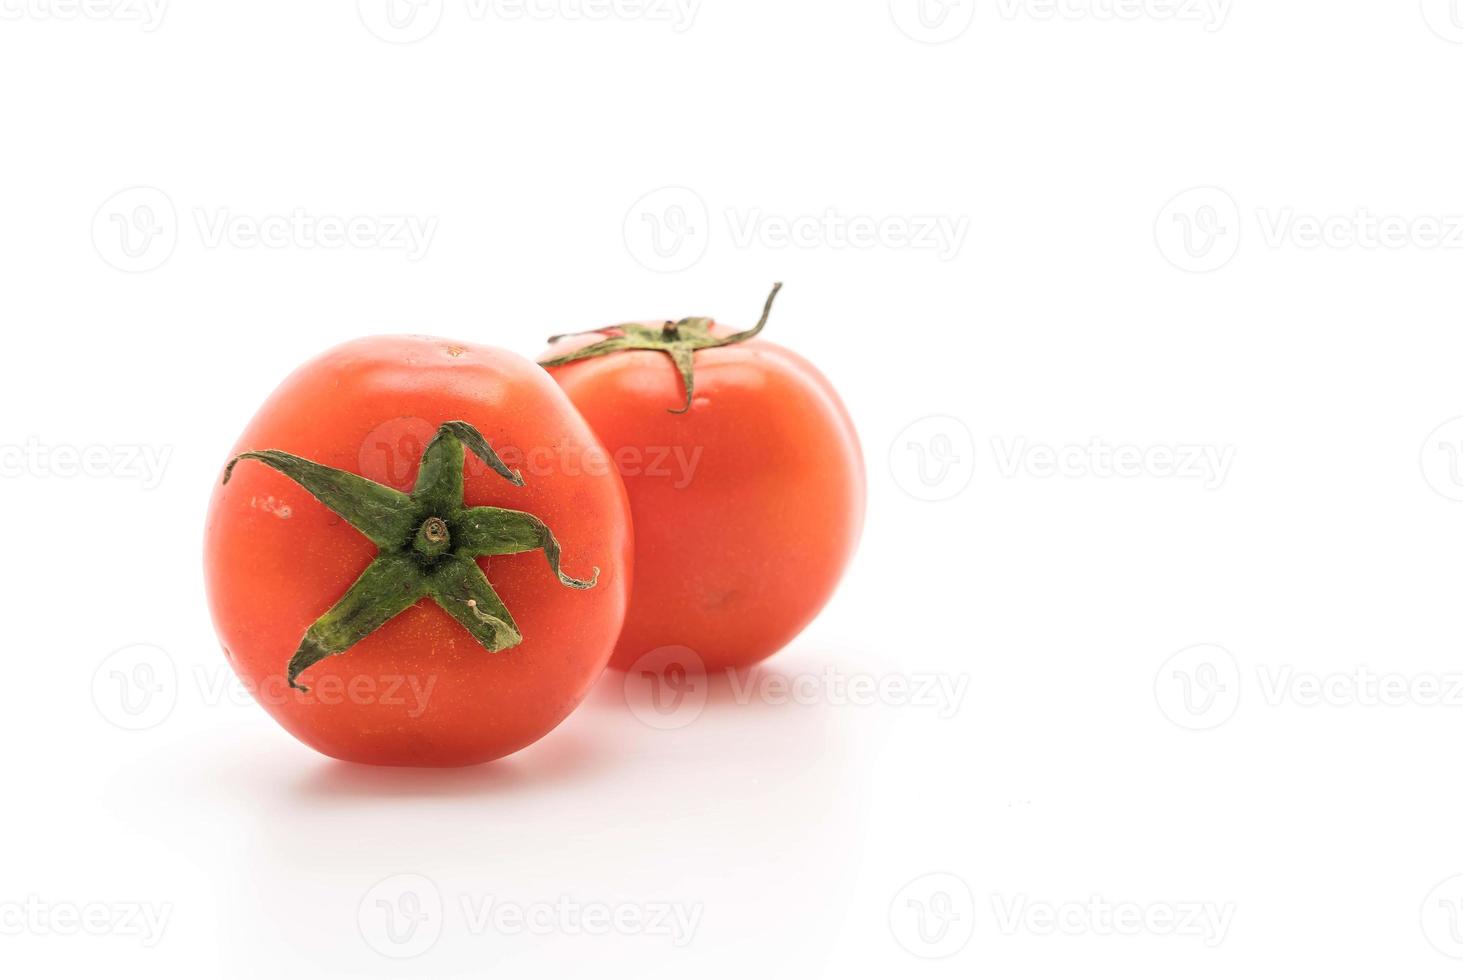 tomates frescos sobre fondo blanco foto